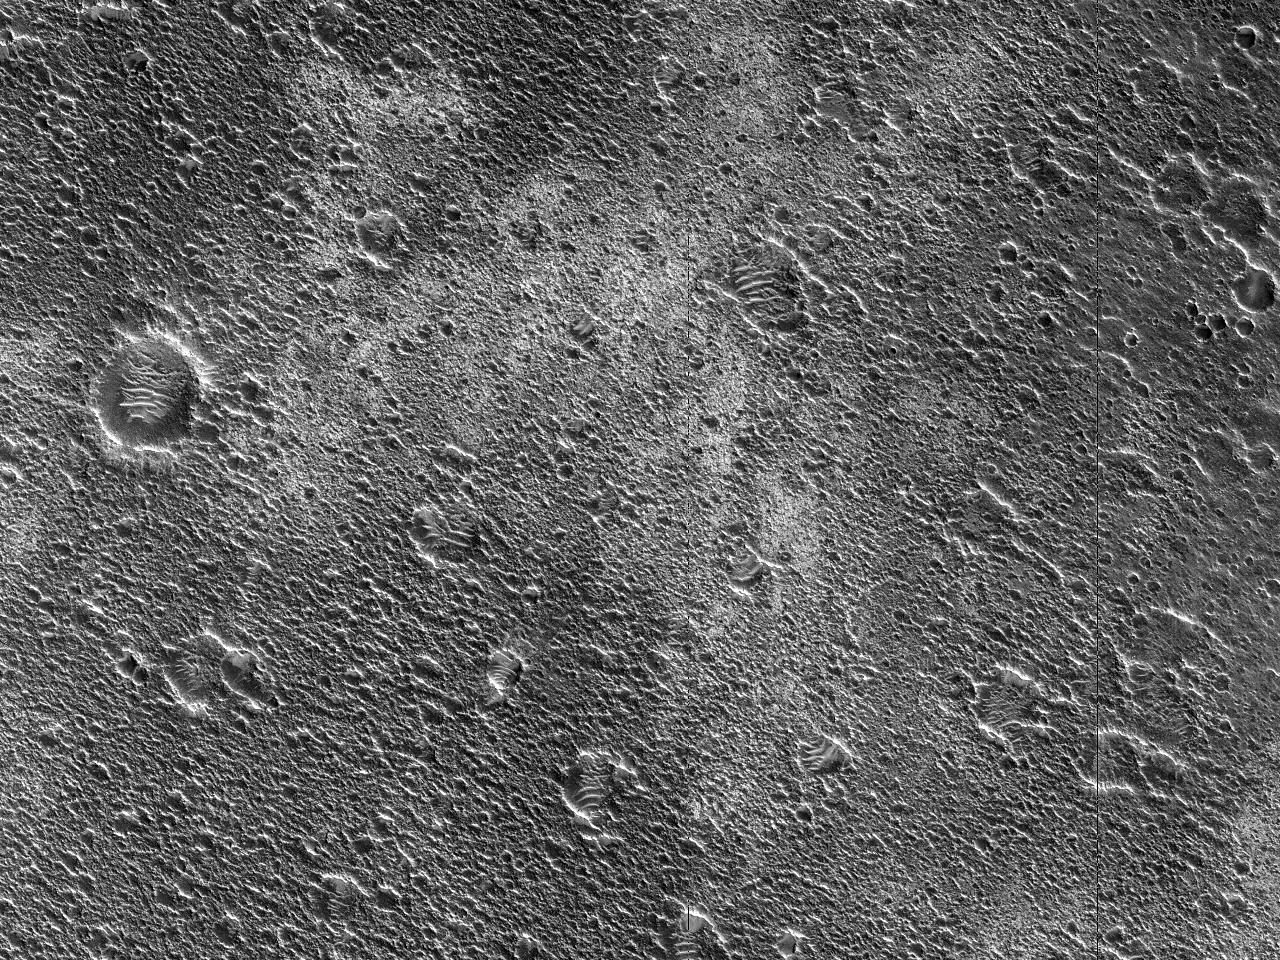 Altipl al marge dun canal a Chryse Planitia